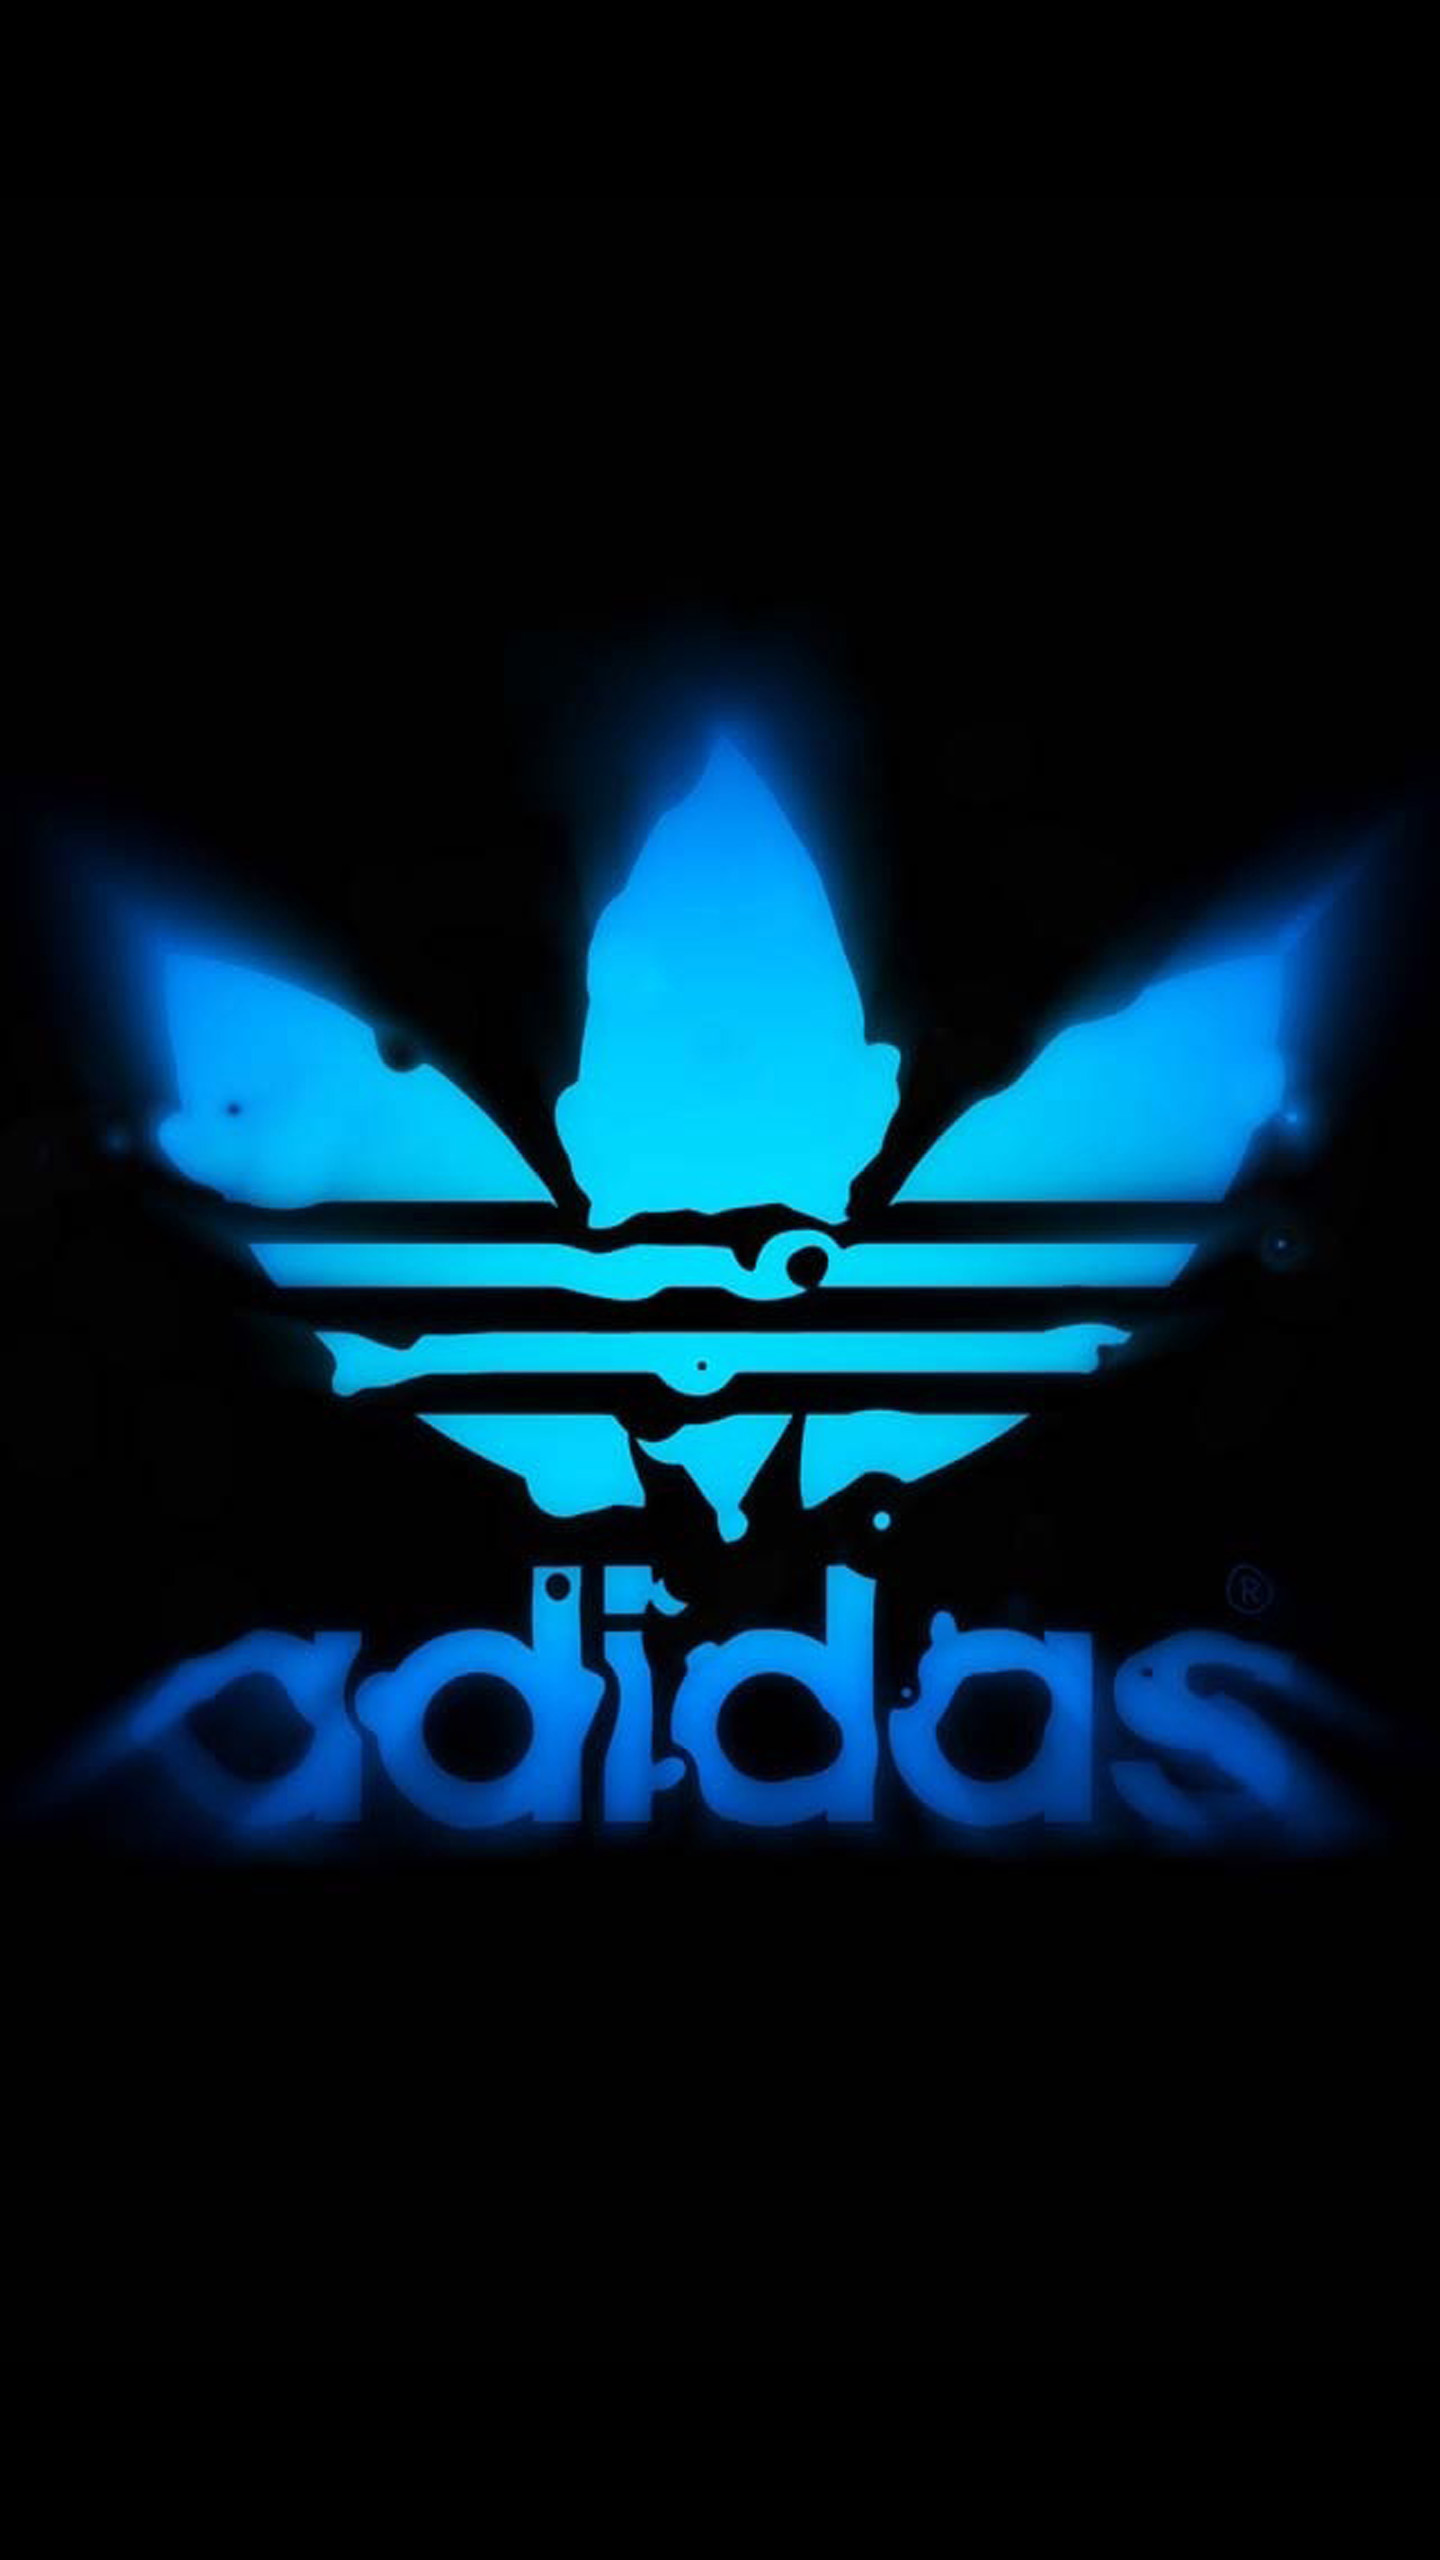 Galaxy Adidas Logos